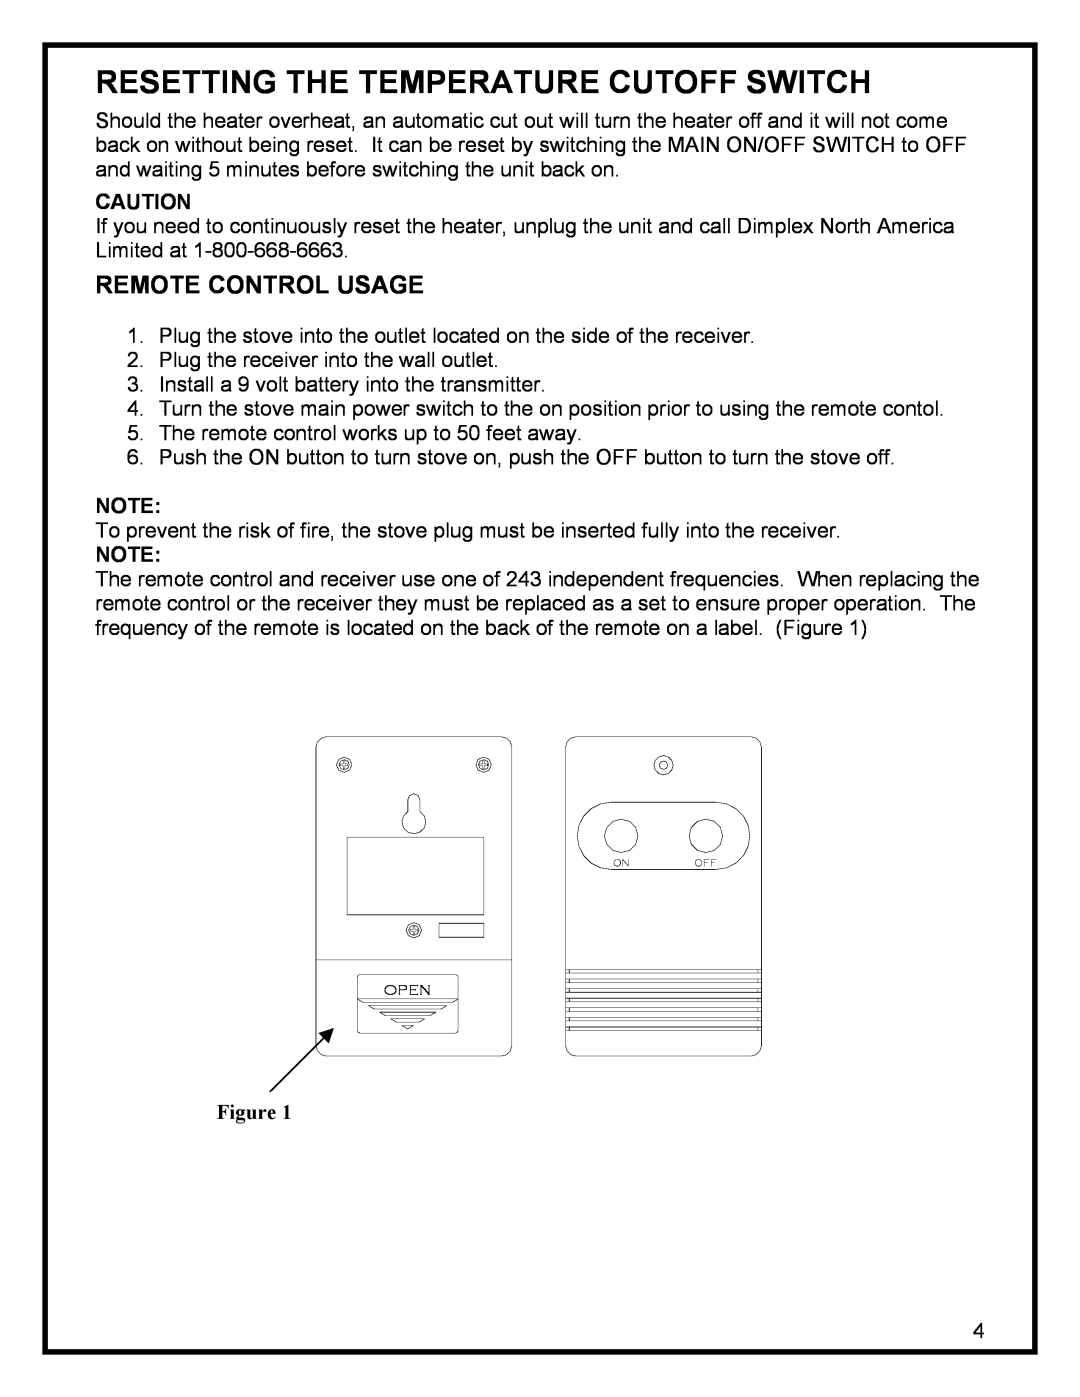 Dimplex ELECTRIC STOVE manual Resetting The Temperature Cutoff Switch, Remote Control Usage 